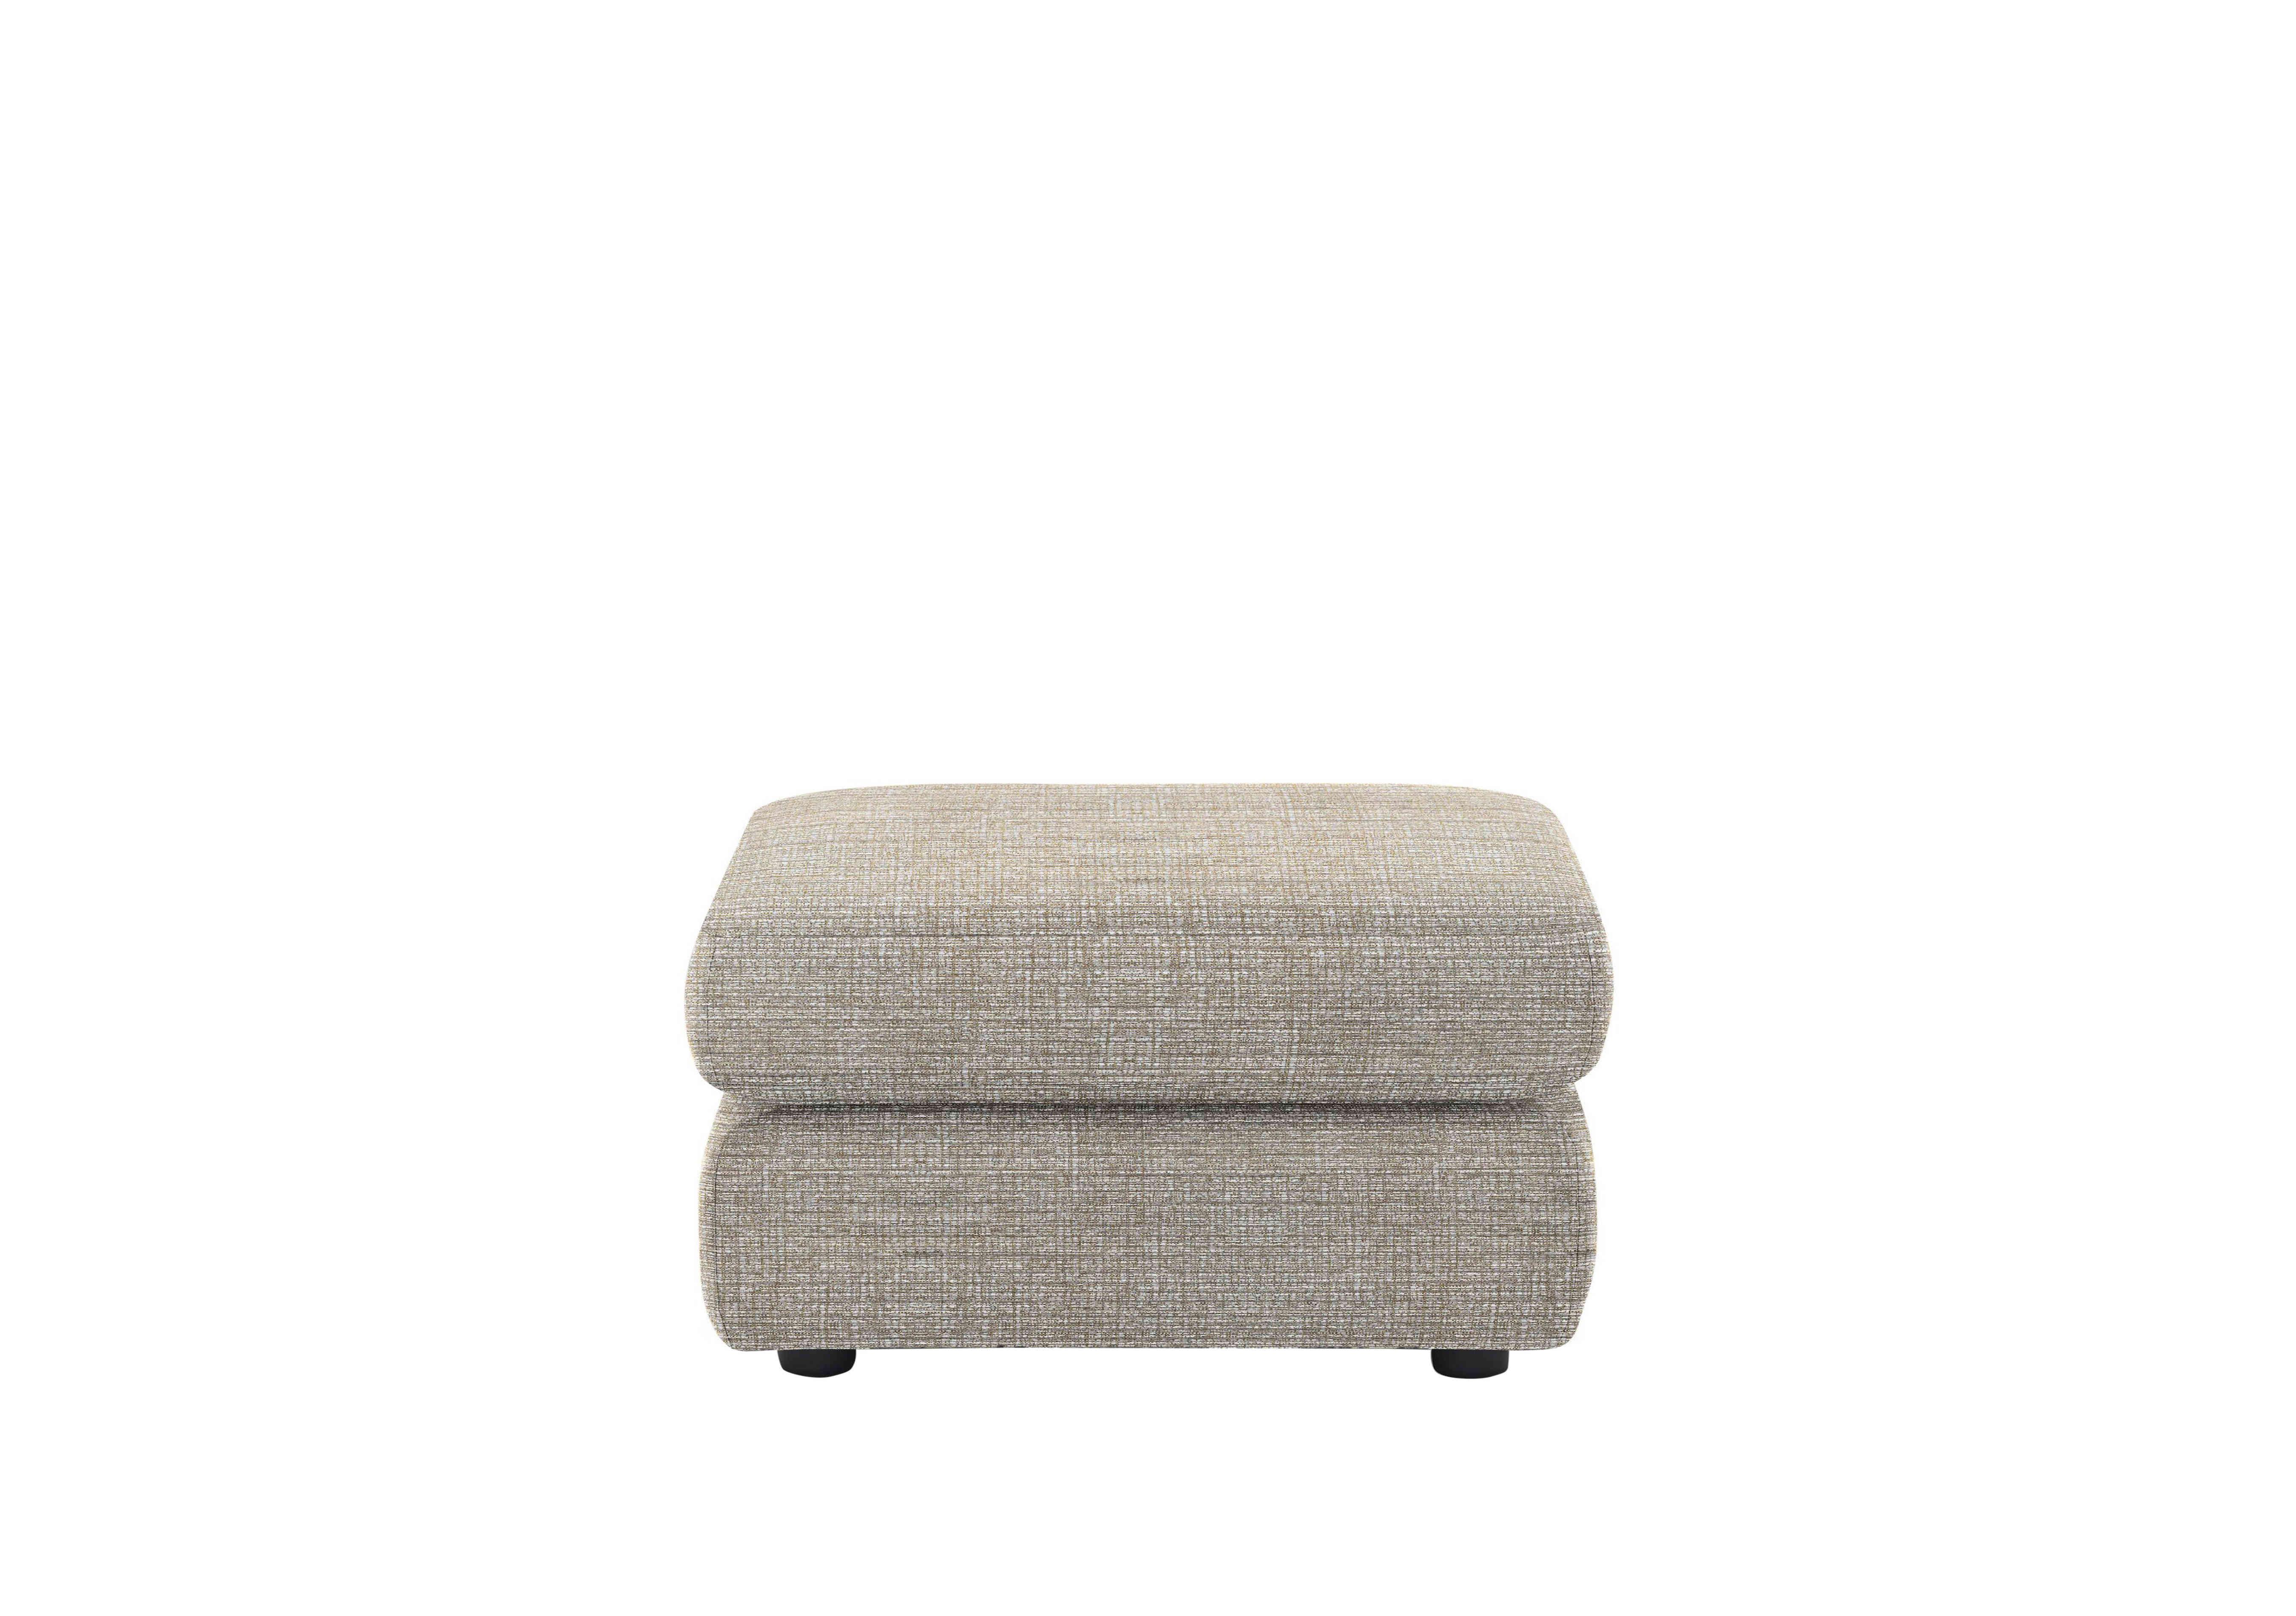 Avon Fabric Storage Footstool in A006 Yarn Shale on Furniture Village